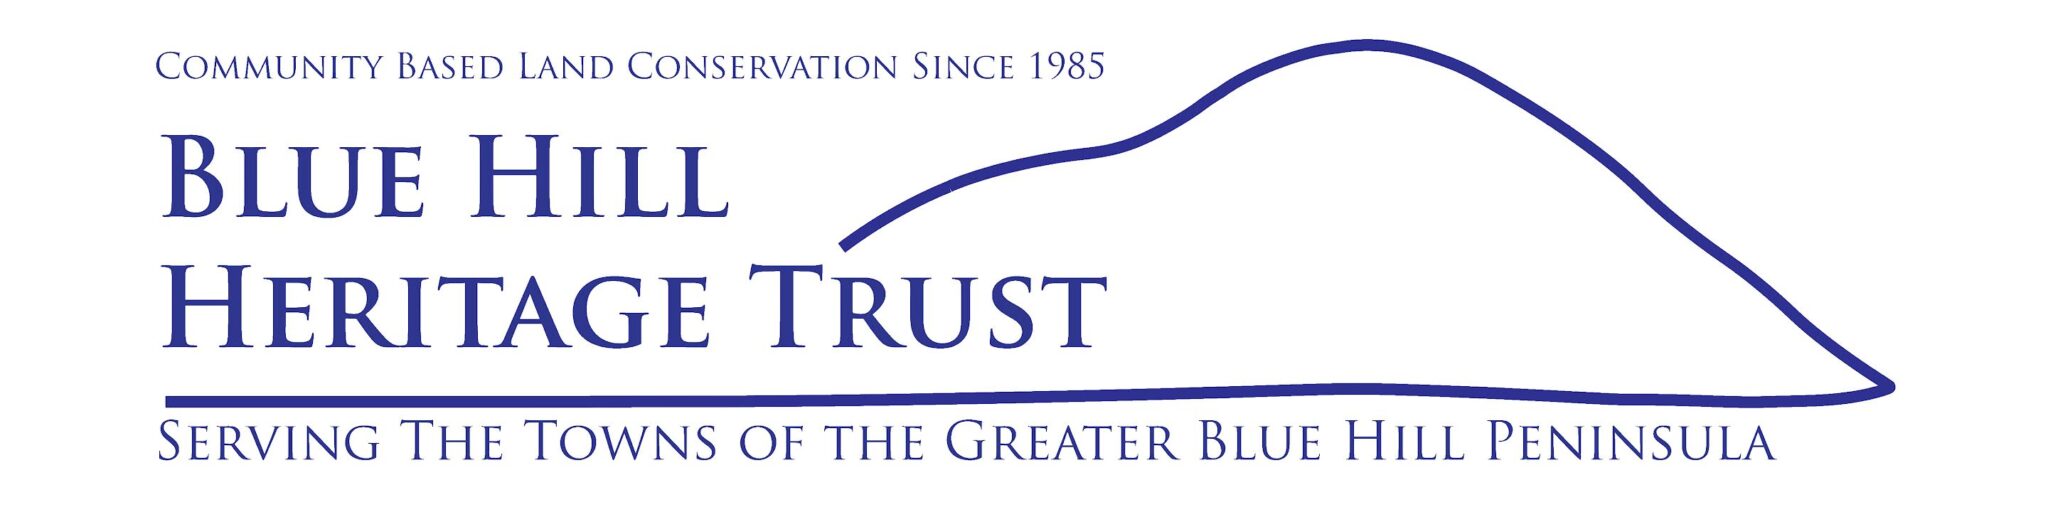 Blue Hill Heritage Trust logo.